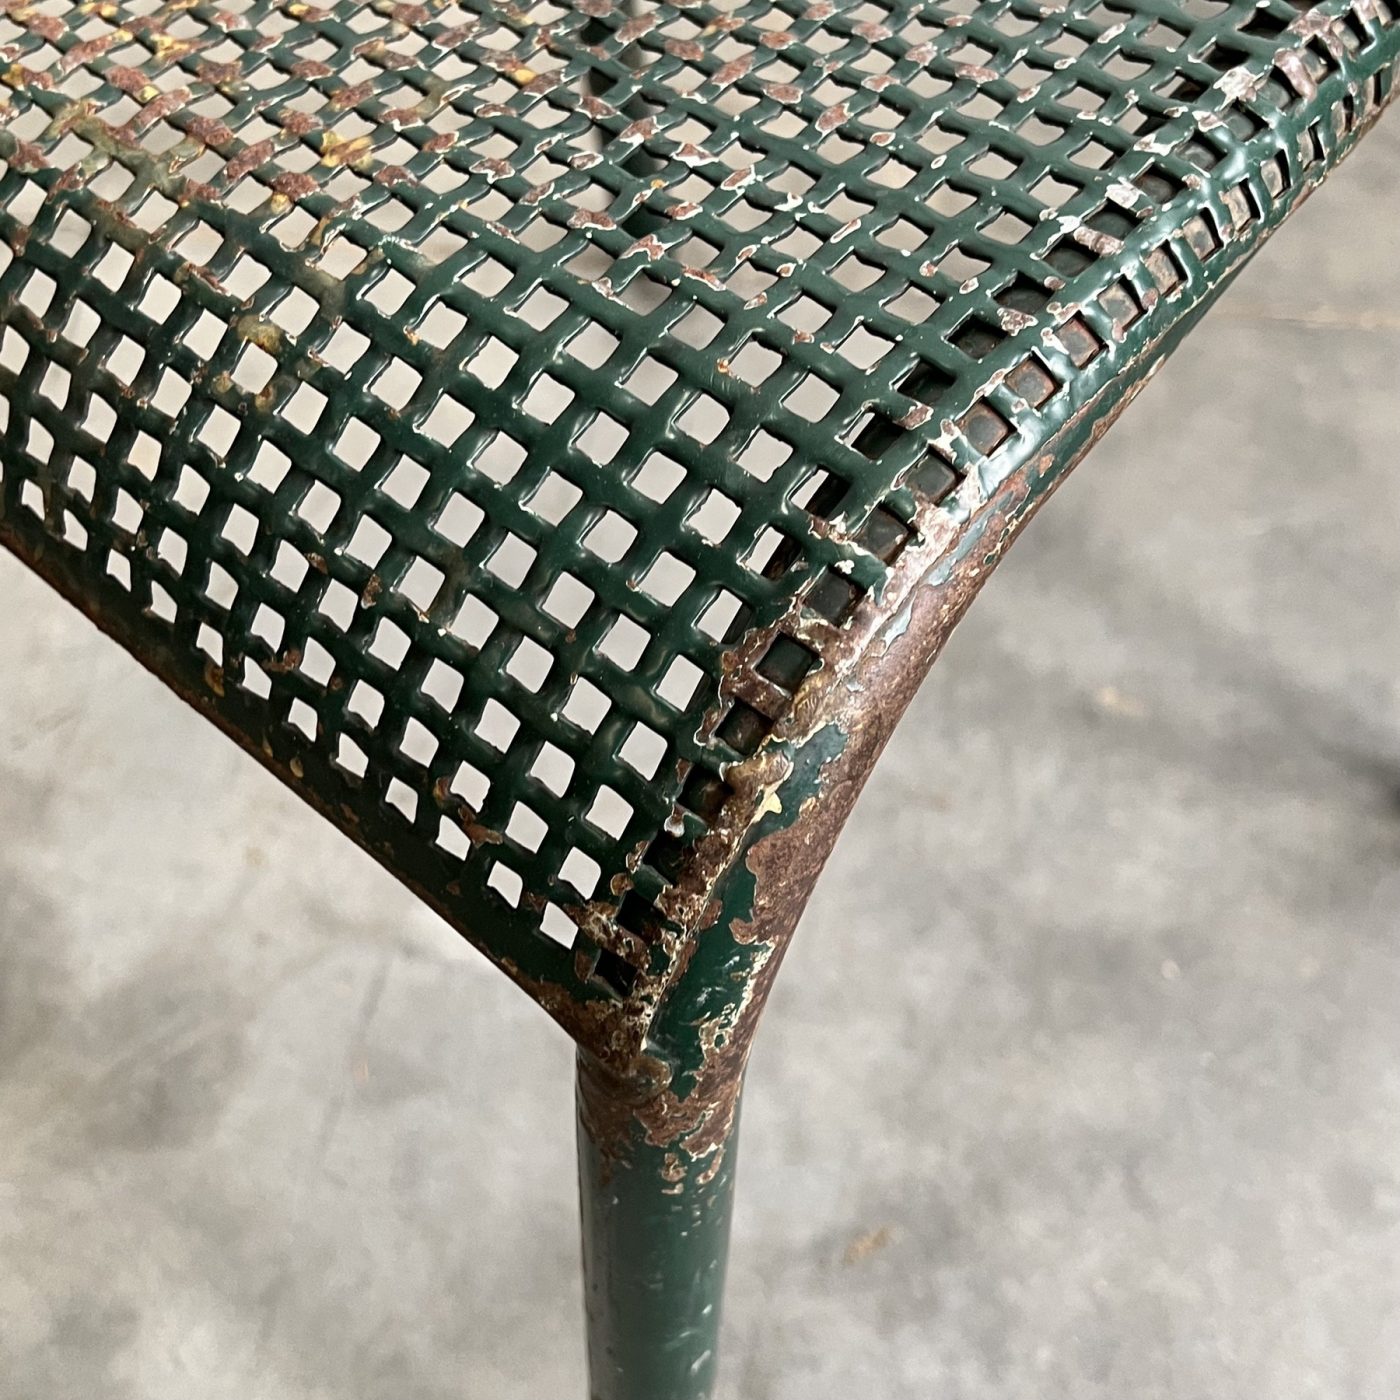 objet-vagabond-metal-chairs0001